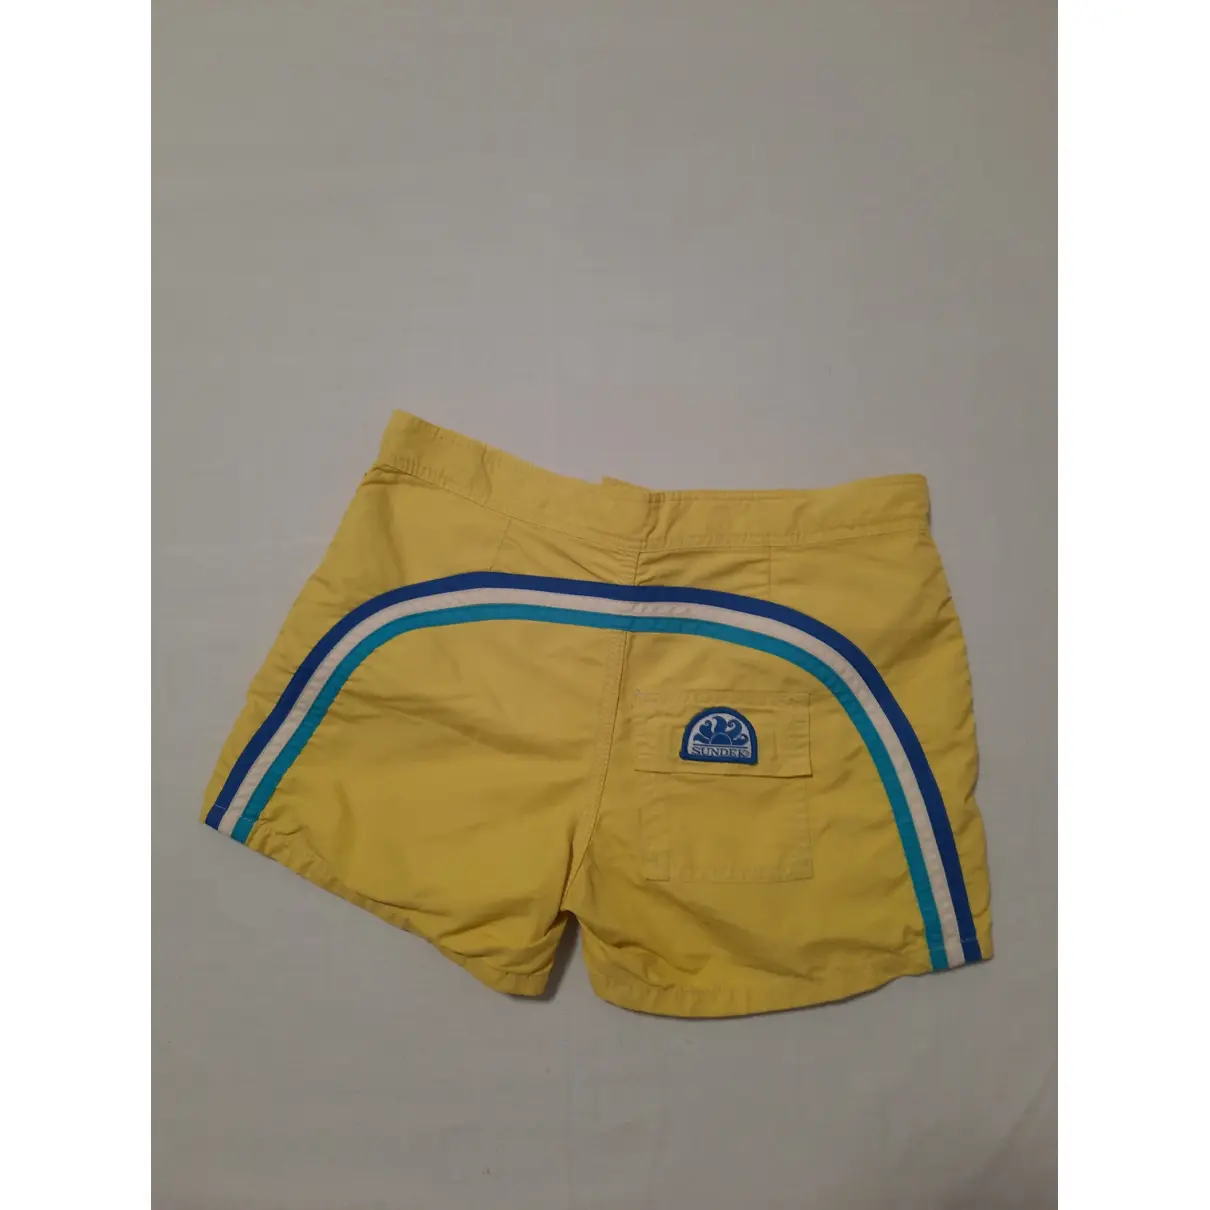 Buy Sundek Shorts online